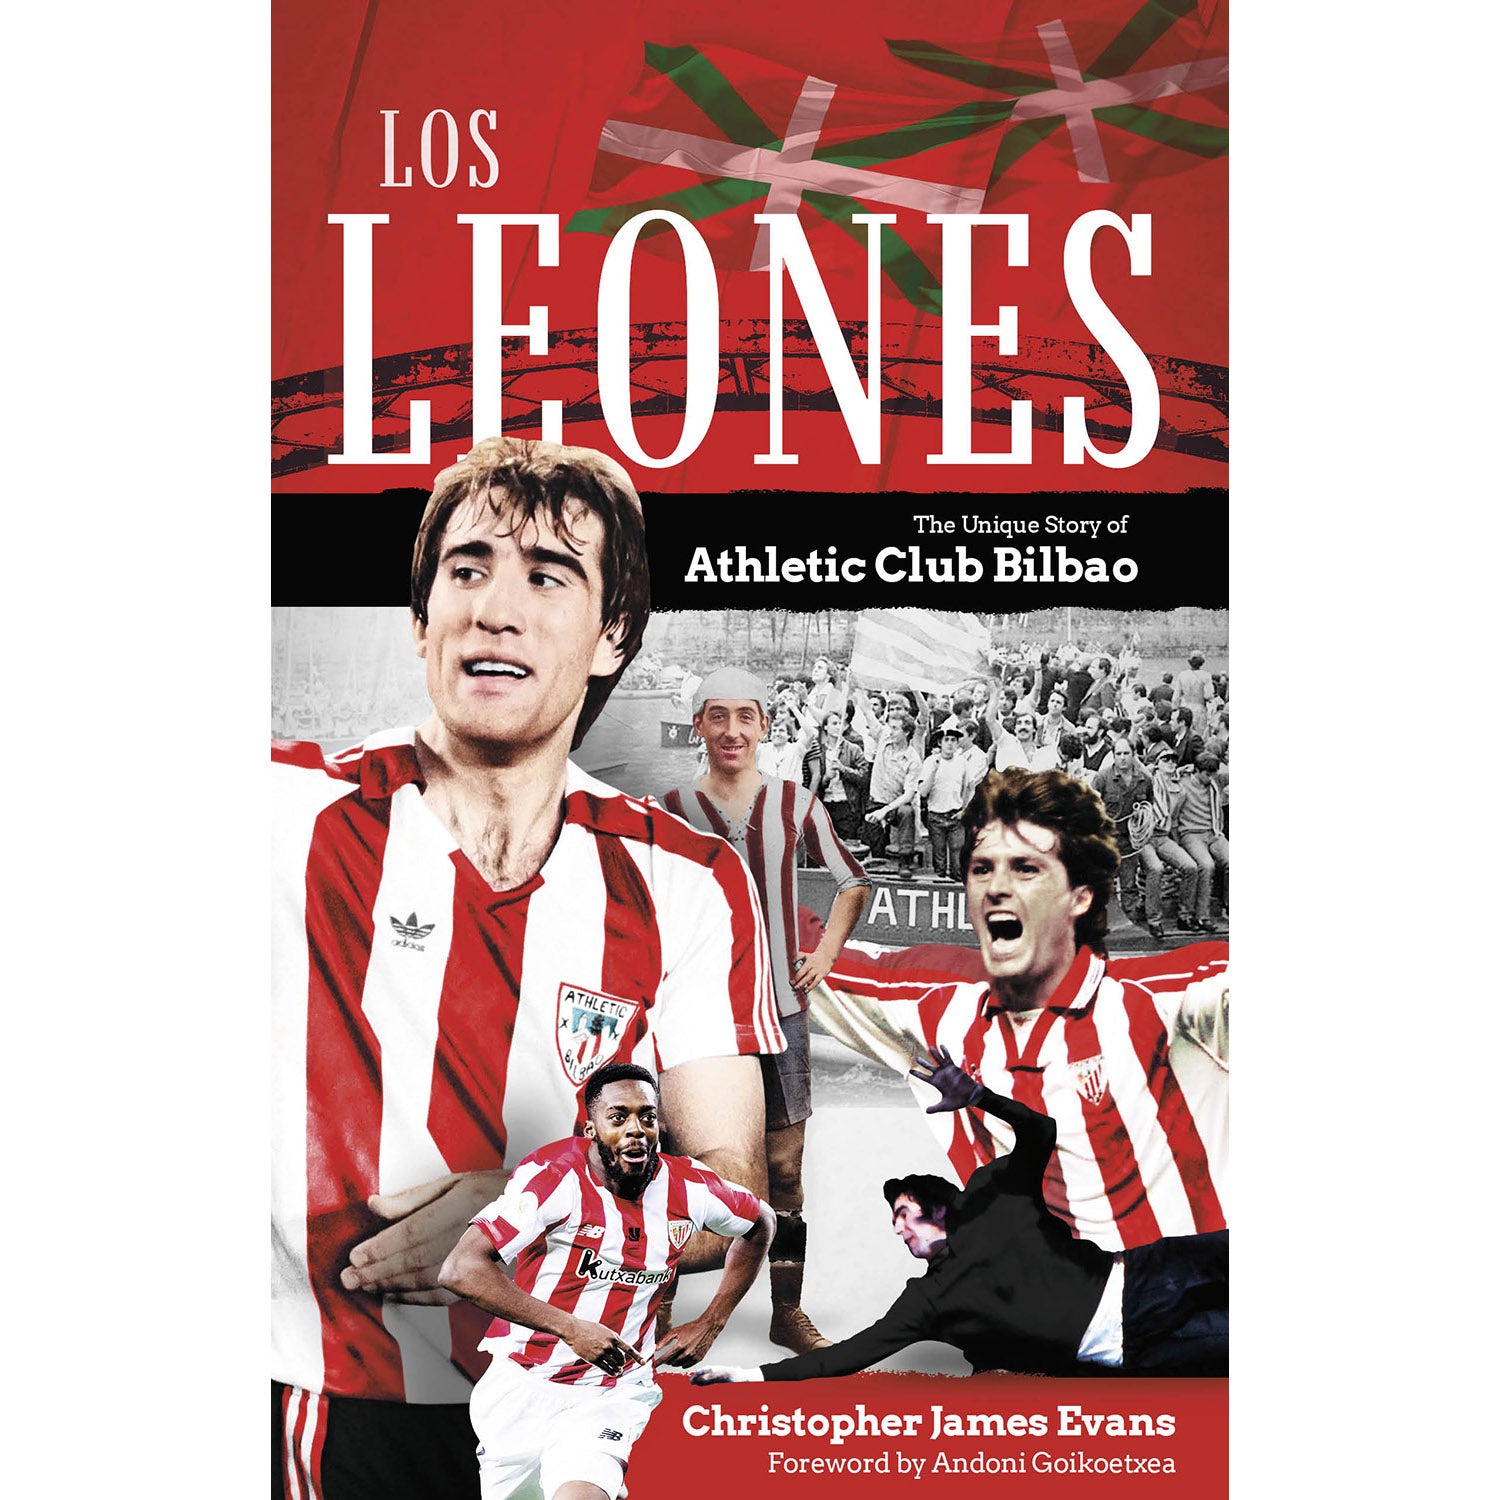 Los Leones – The Unique Story of Athletic Club Bilbao